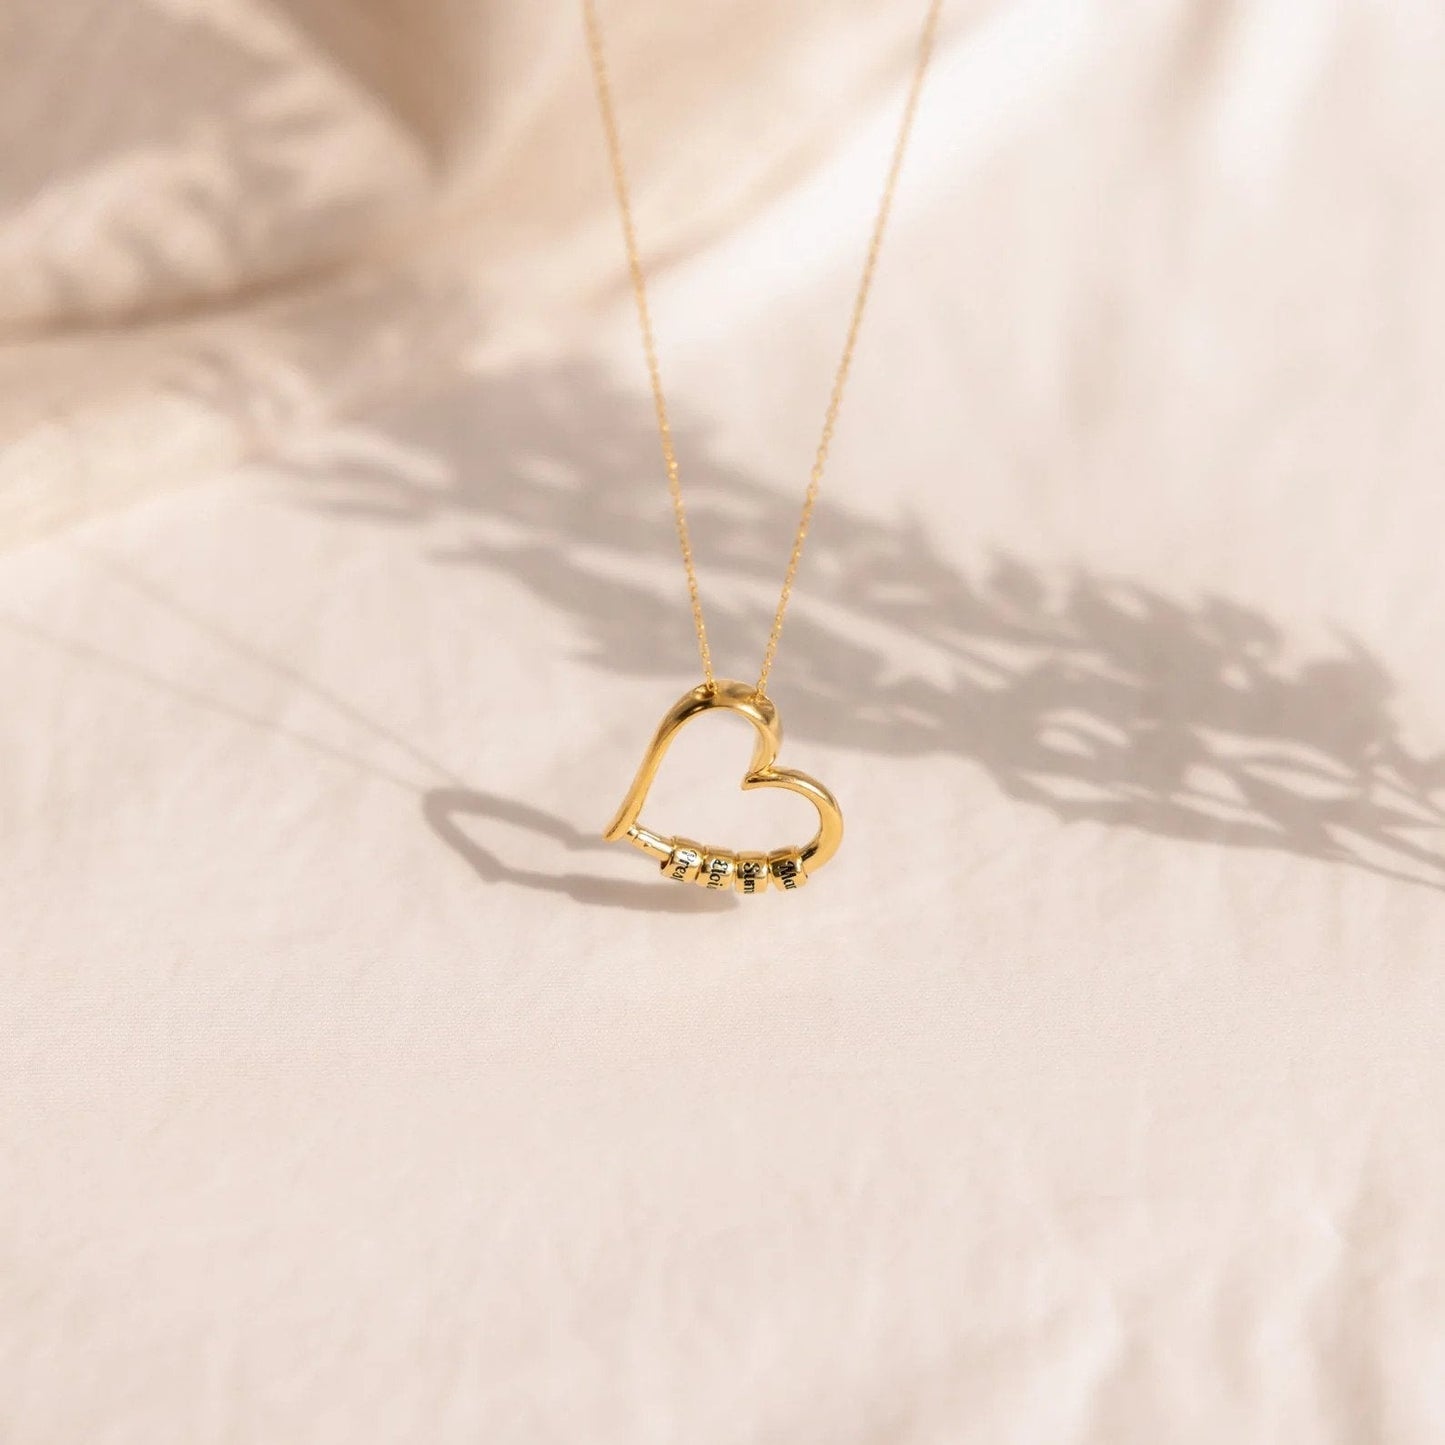 Custom Bead Heart Necklace